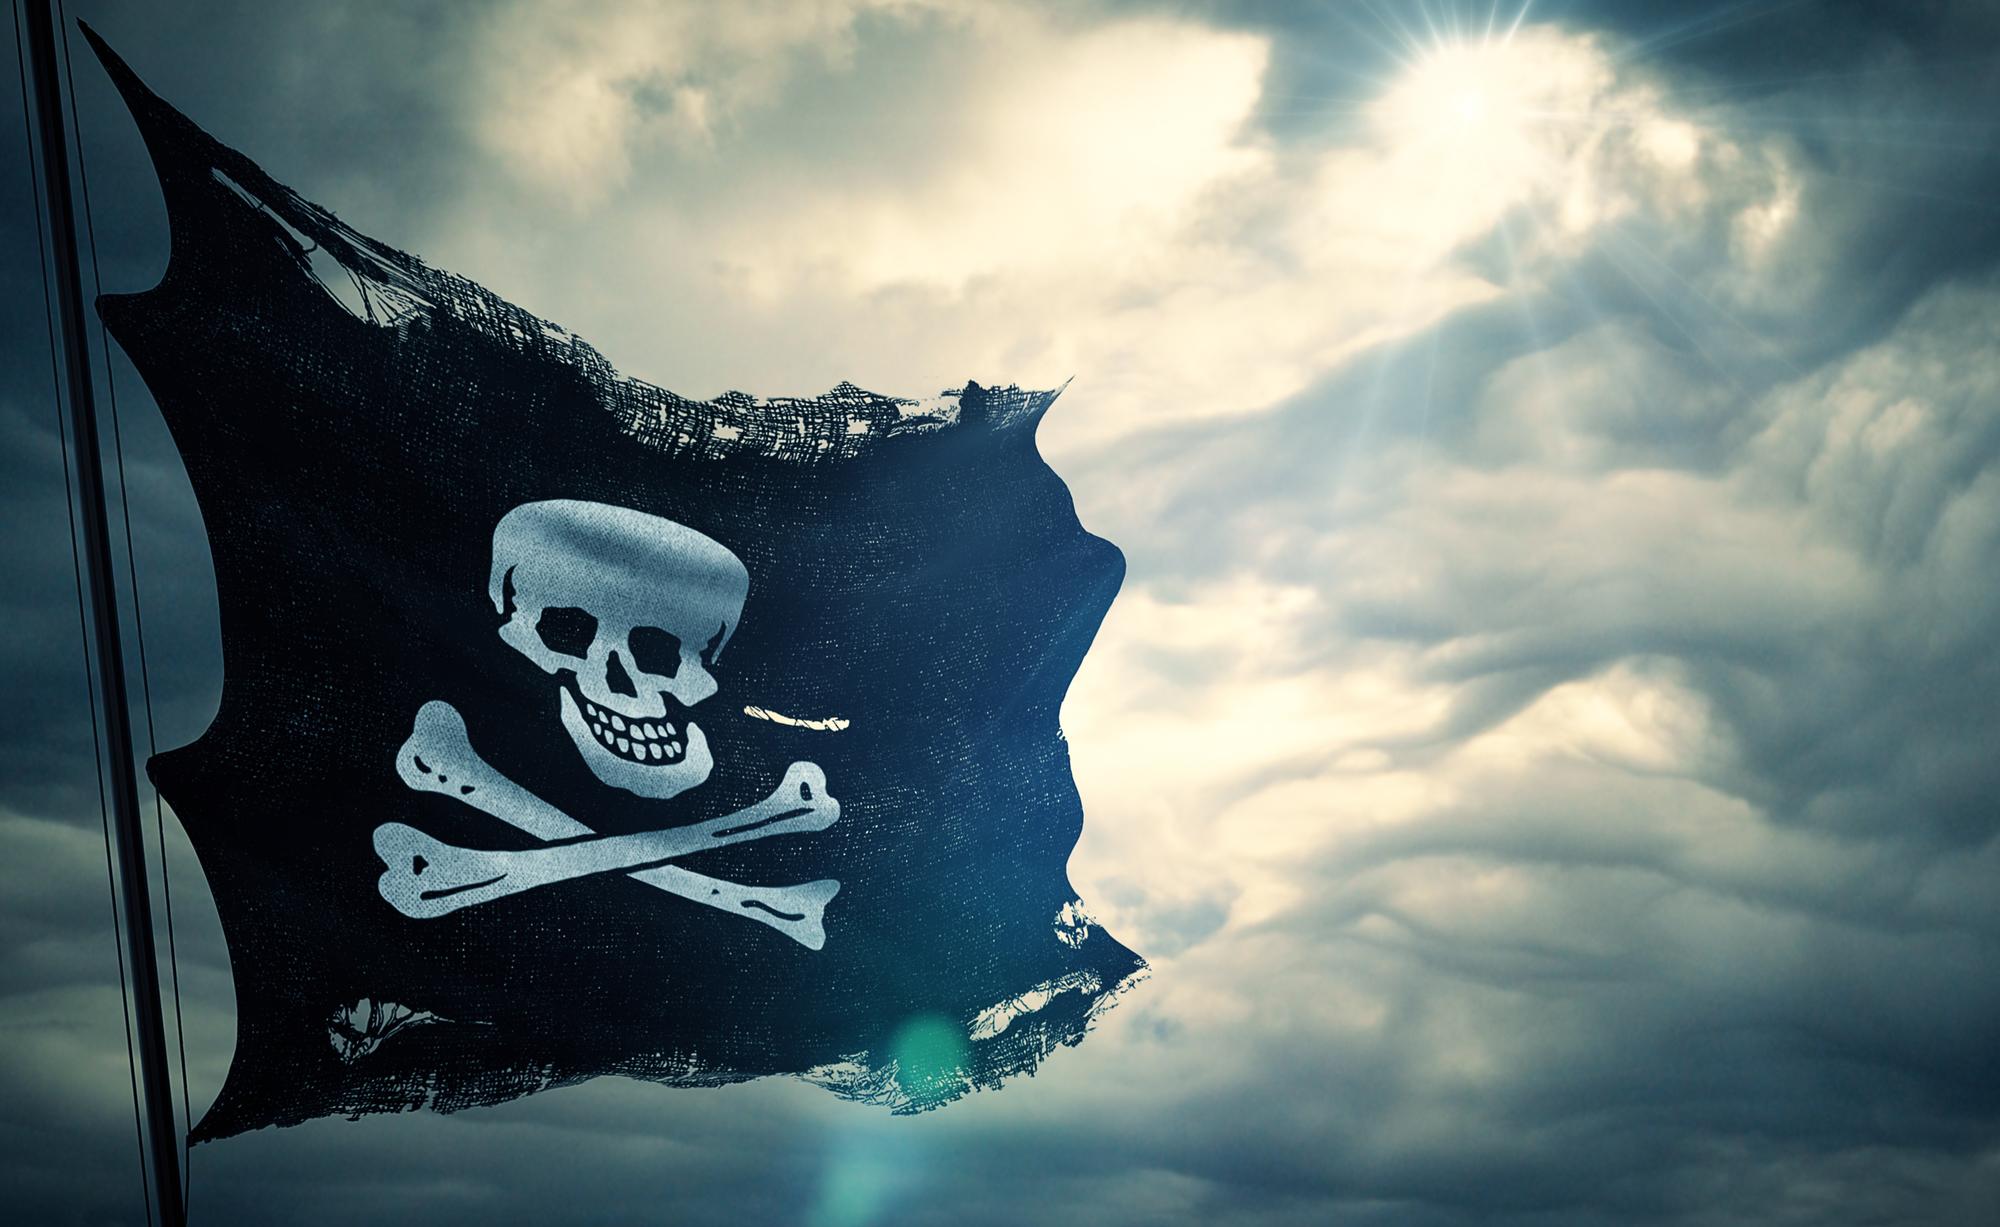 Leaseweb muss Piraten-Kunden entlarven